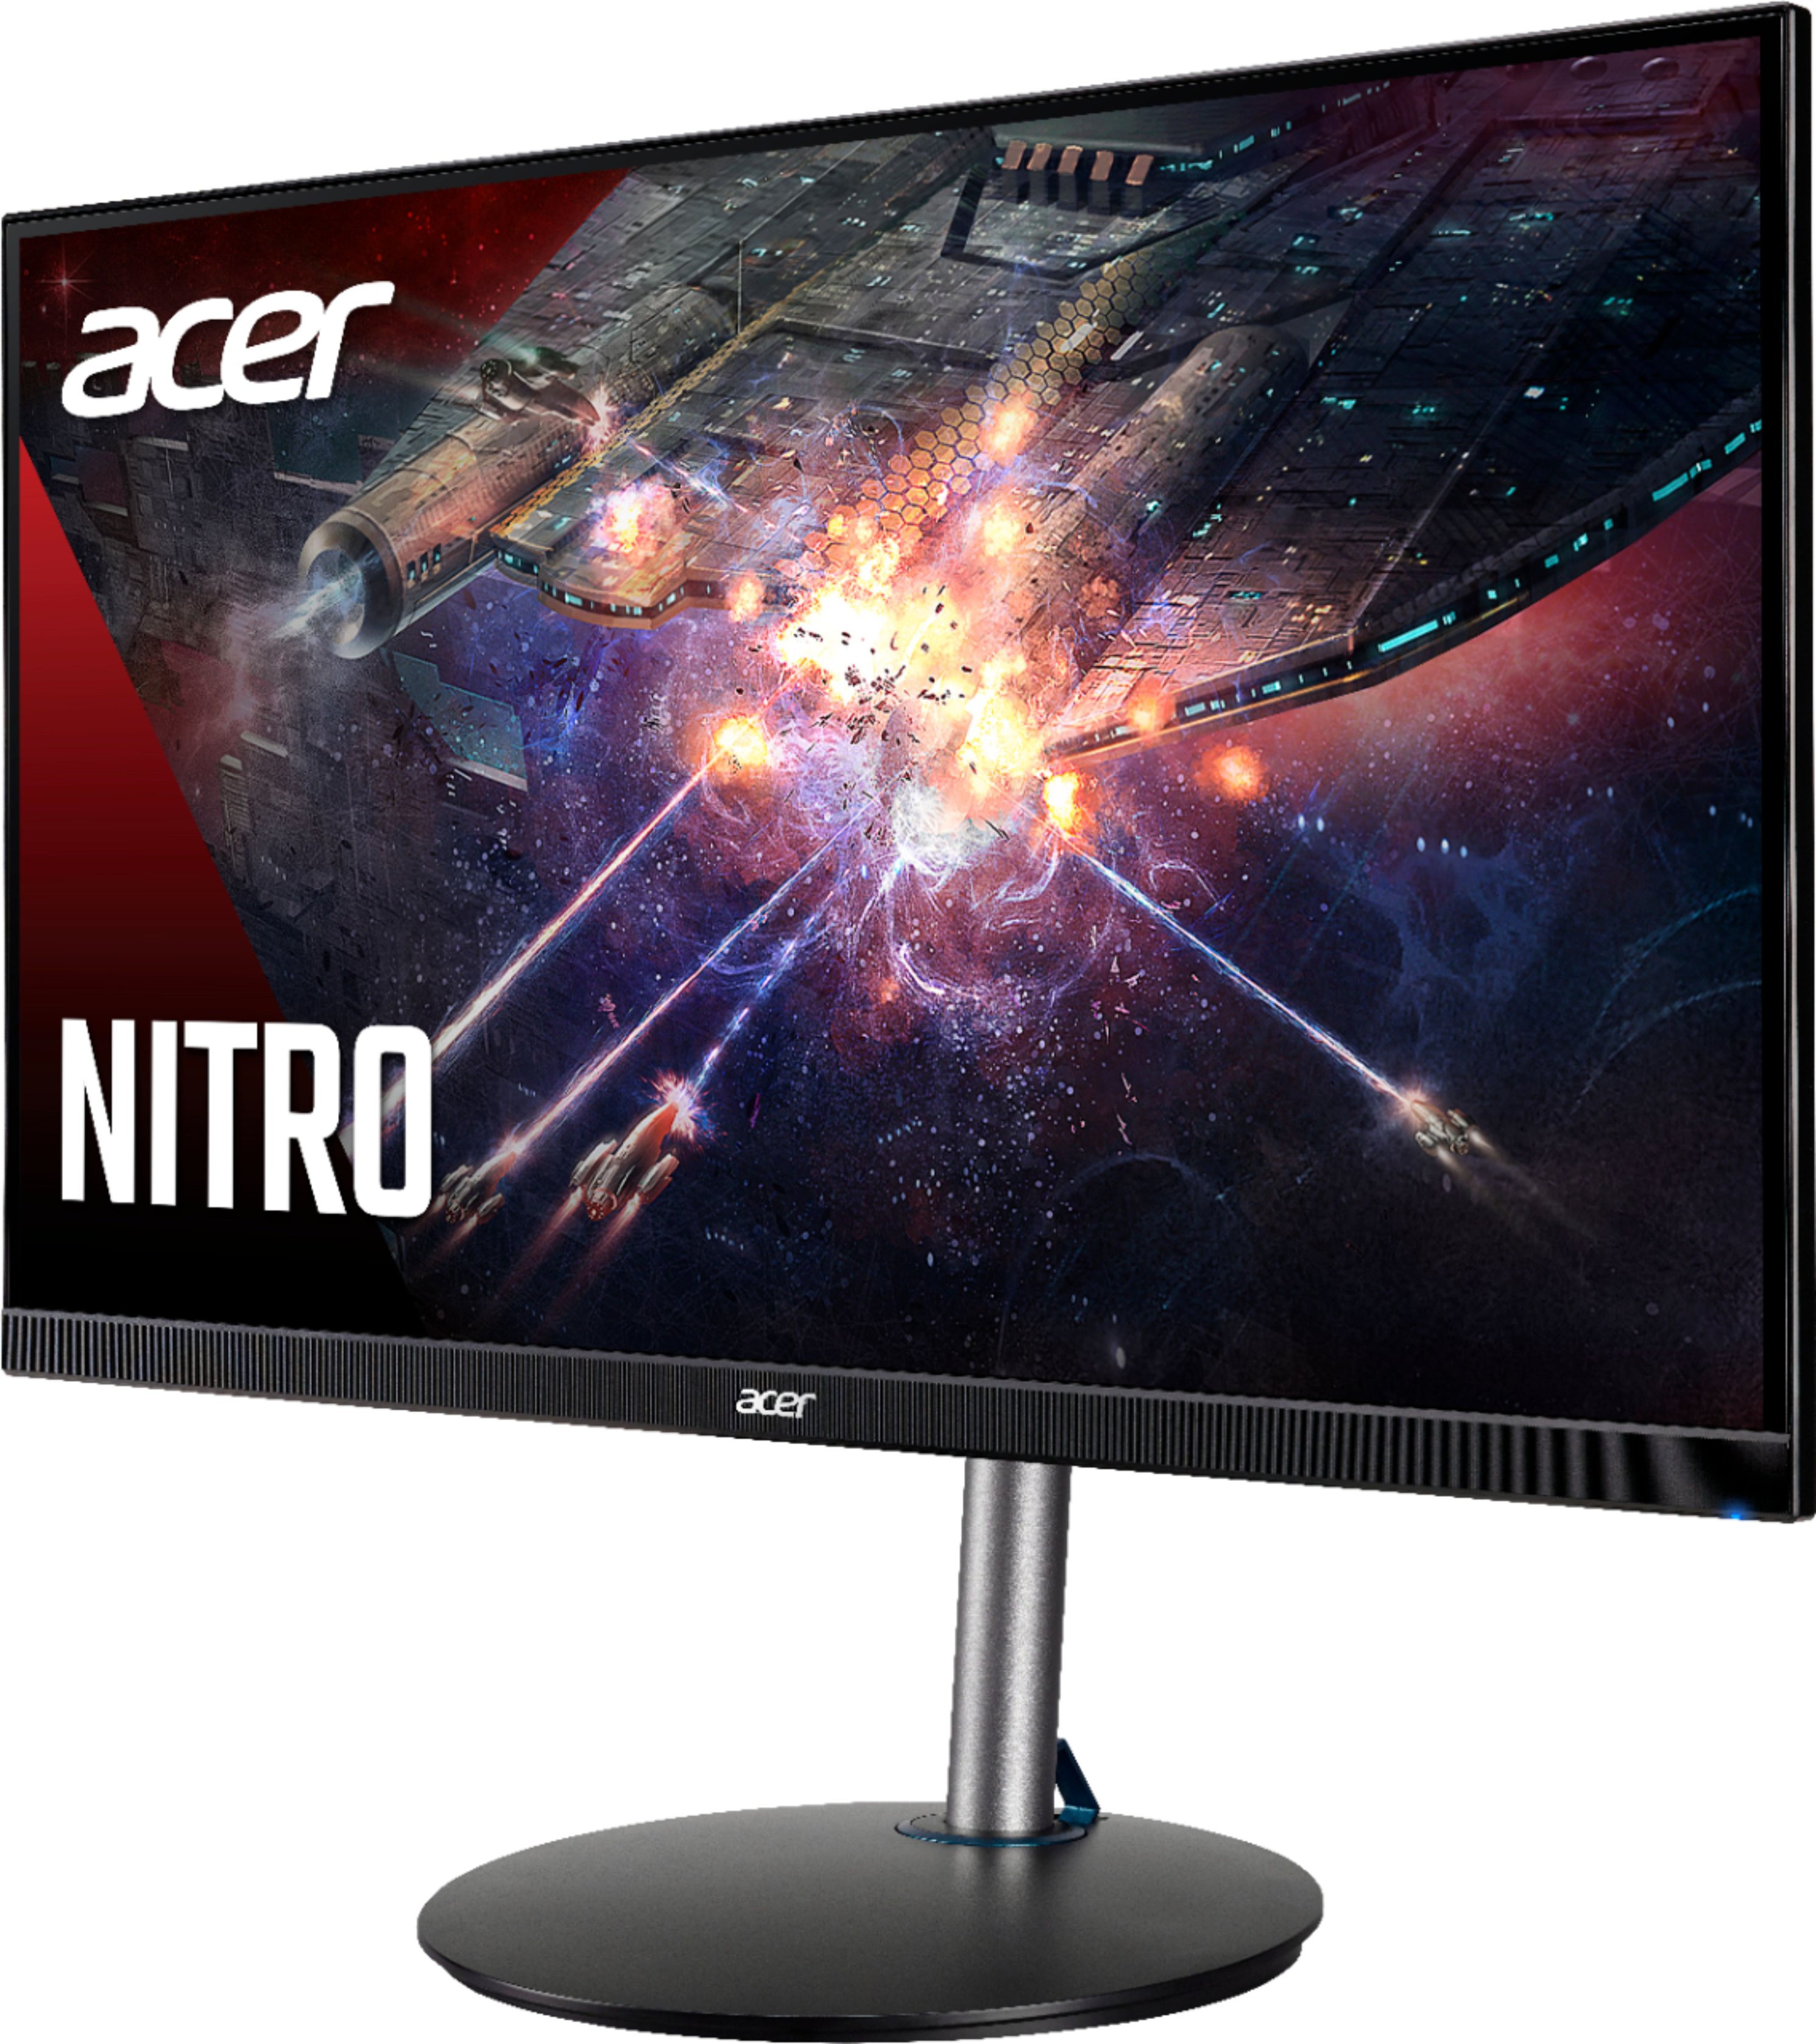 Angle View: Acer - Nitro 27" IPS LED FHD FreeSync Gaming Monitor (HDMI 2.0, Display Port)